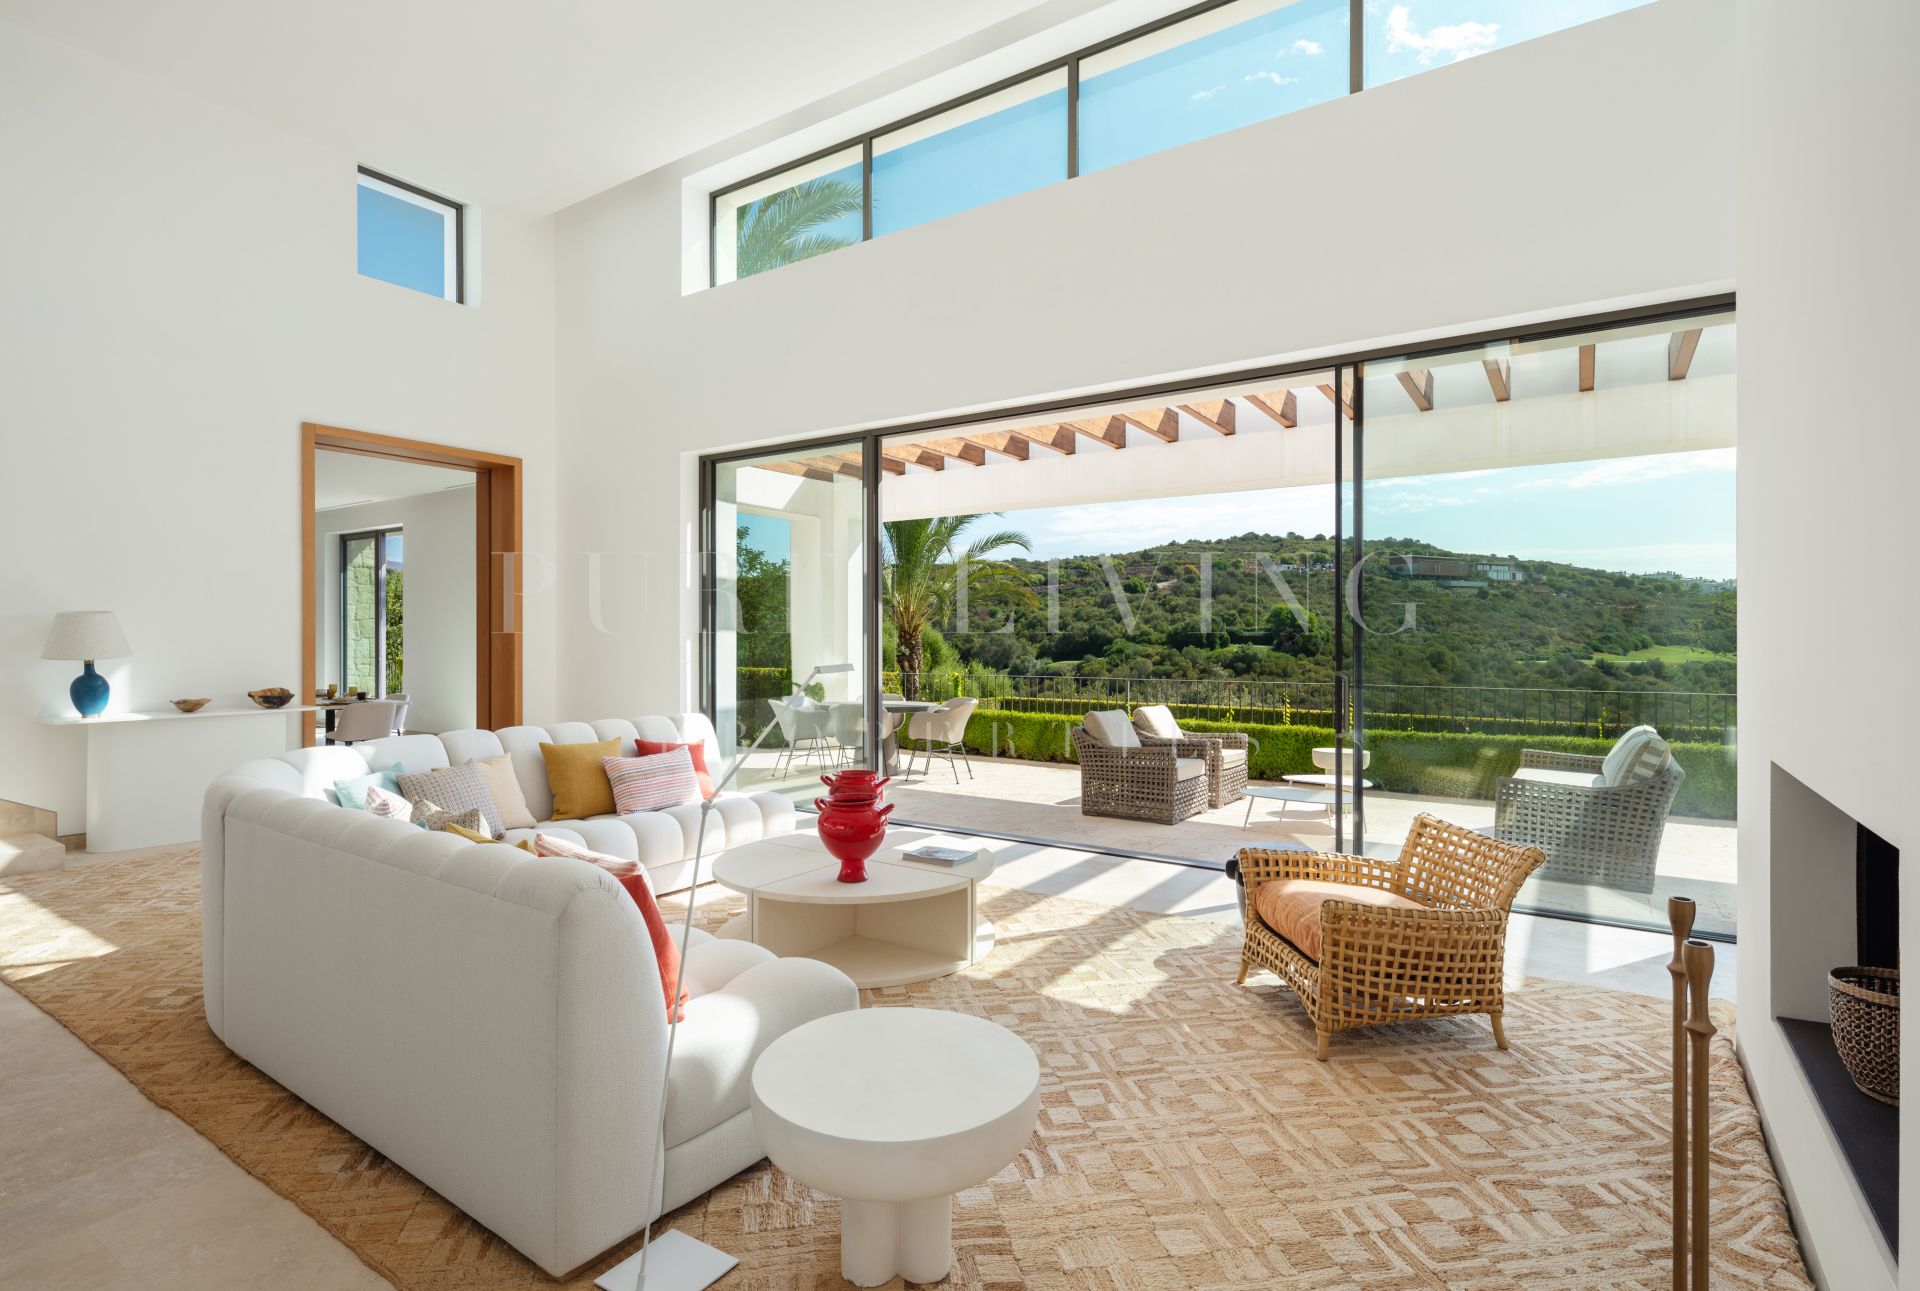 Luxurious six bedroom Villa in prestigious Finca Cortesin in Casares